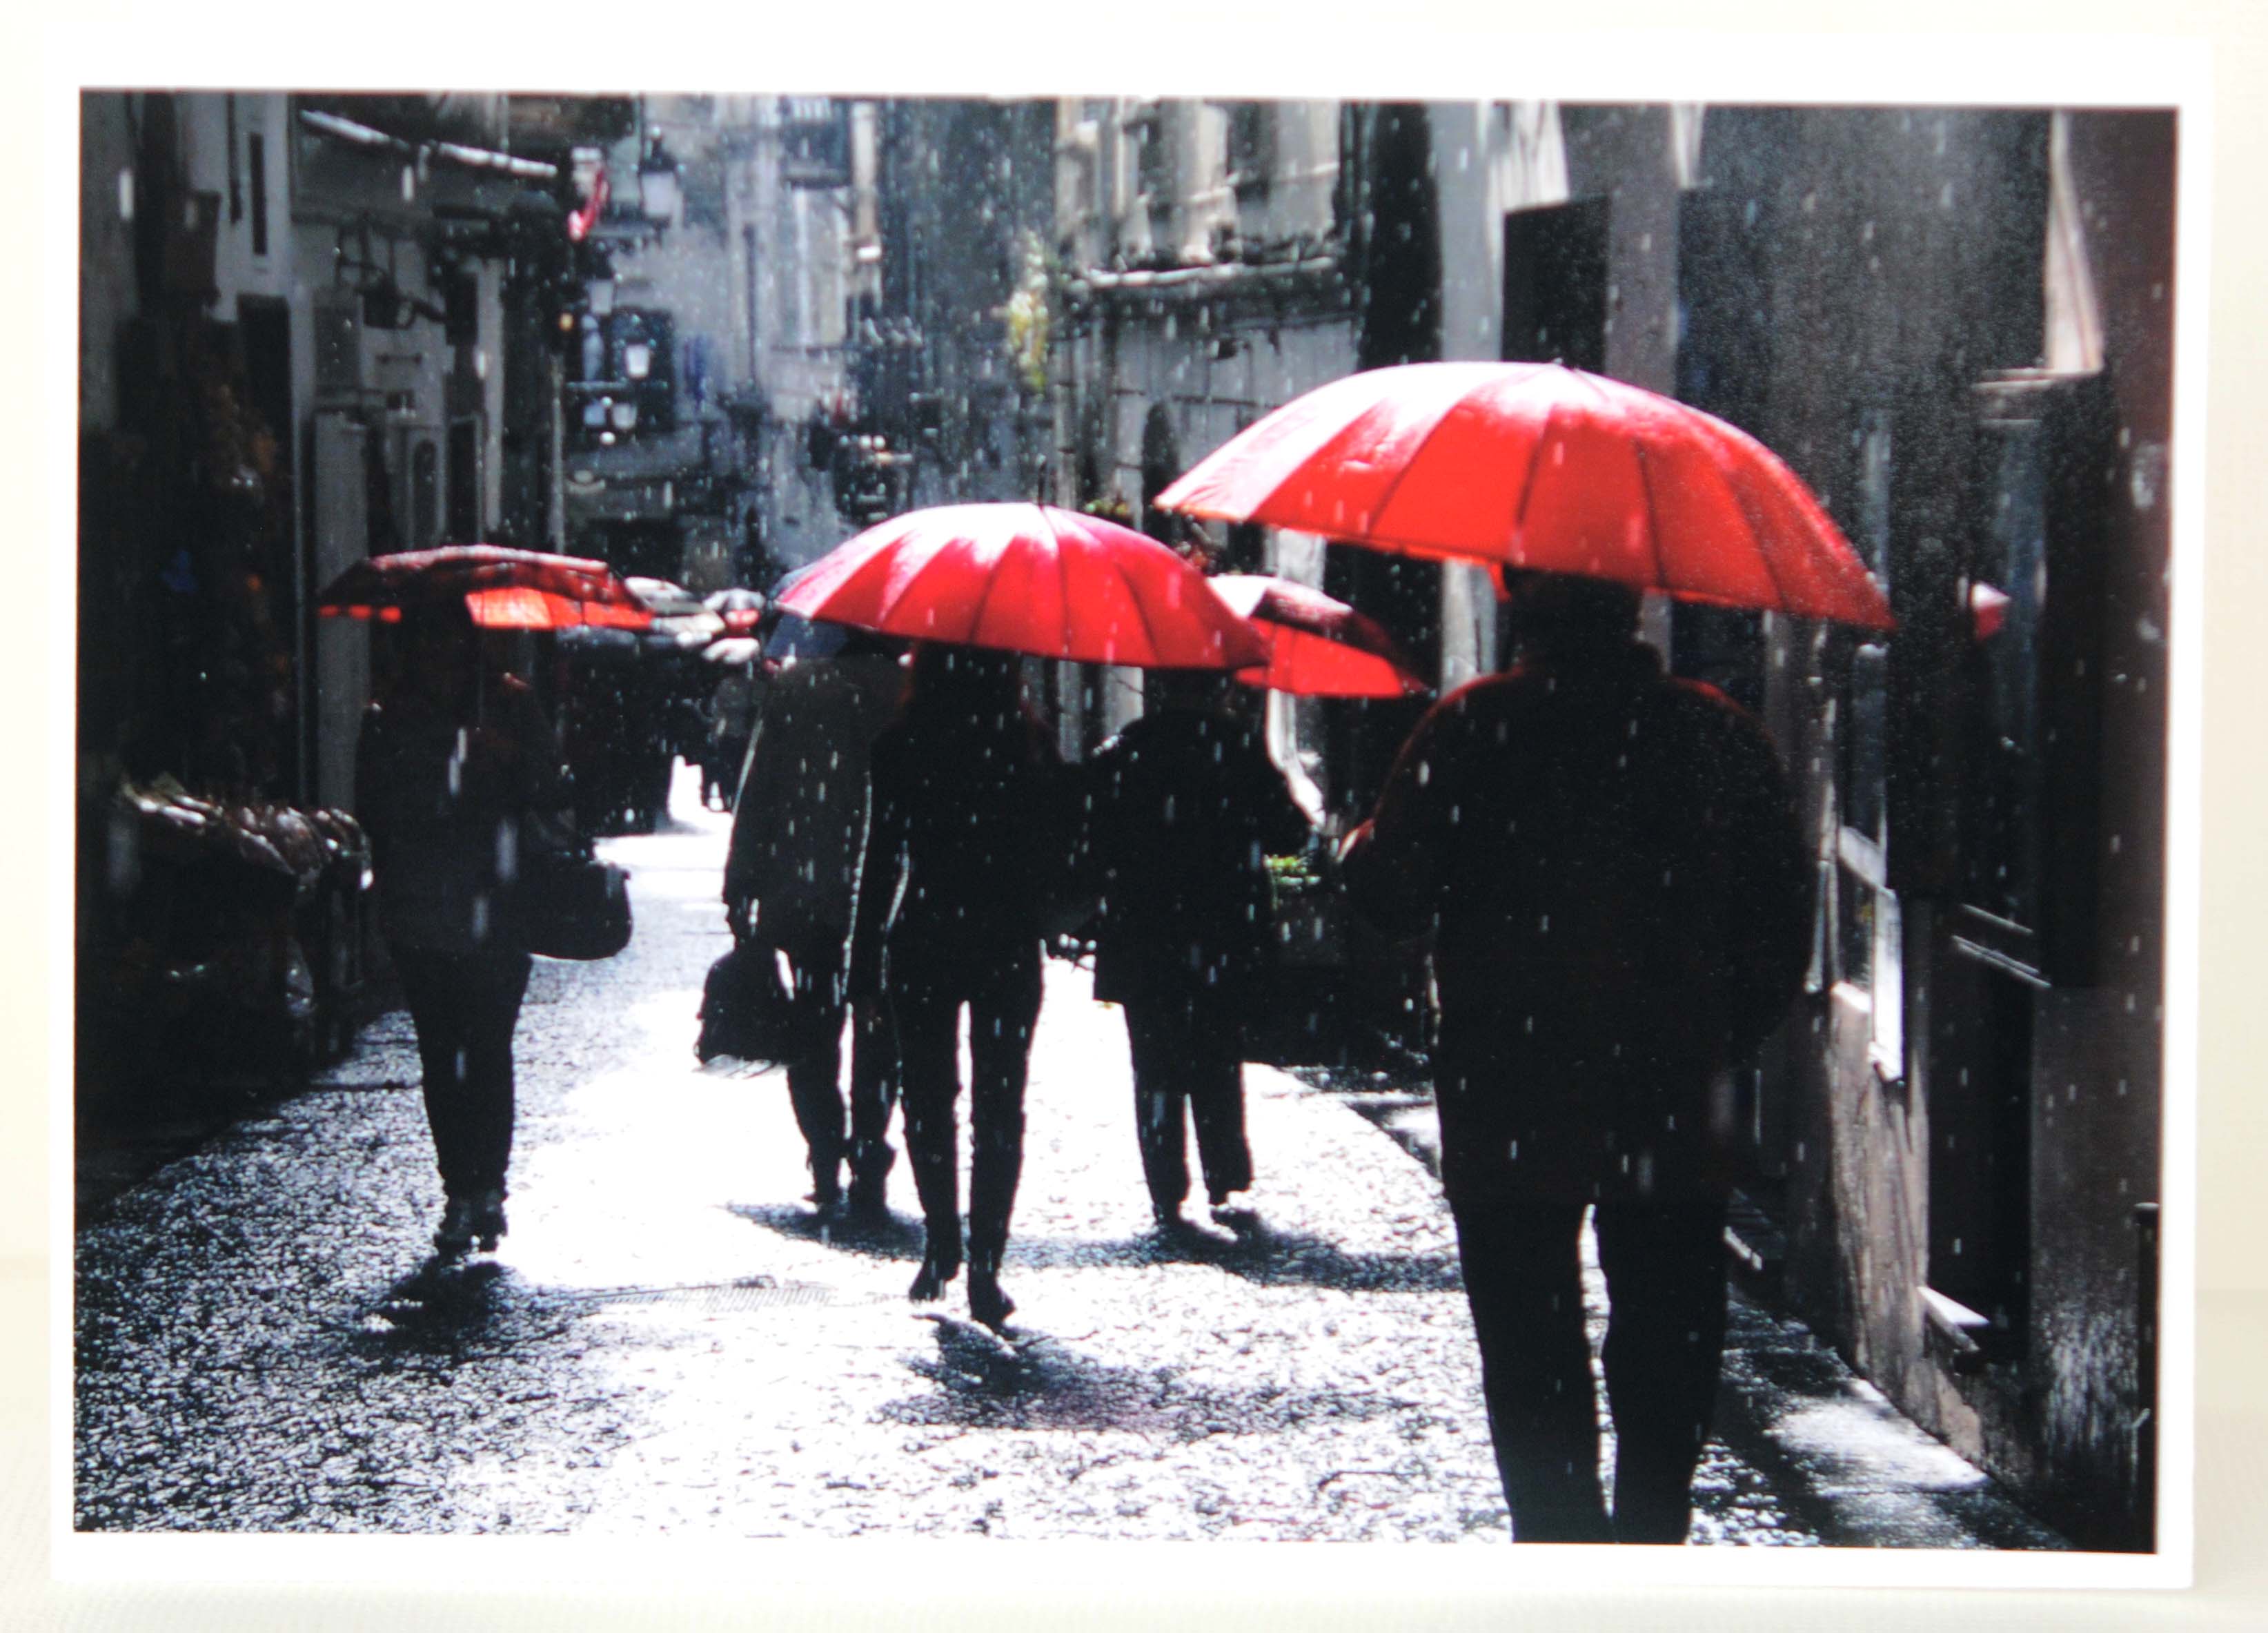 The Red Umbrellas - The Studio 56The Studio 56